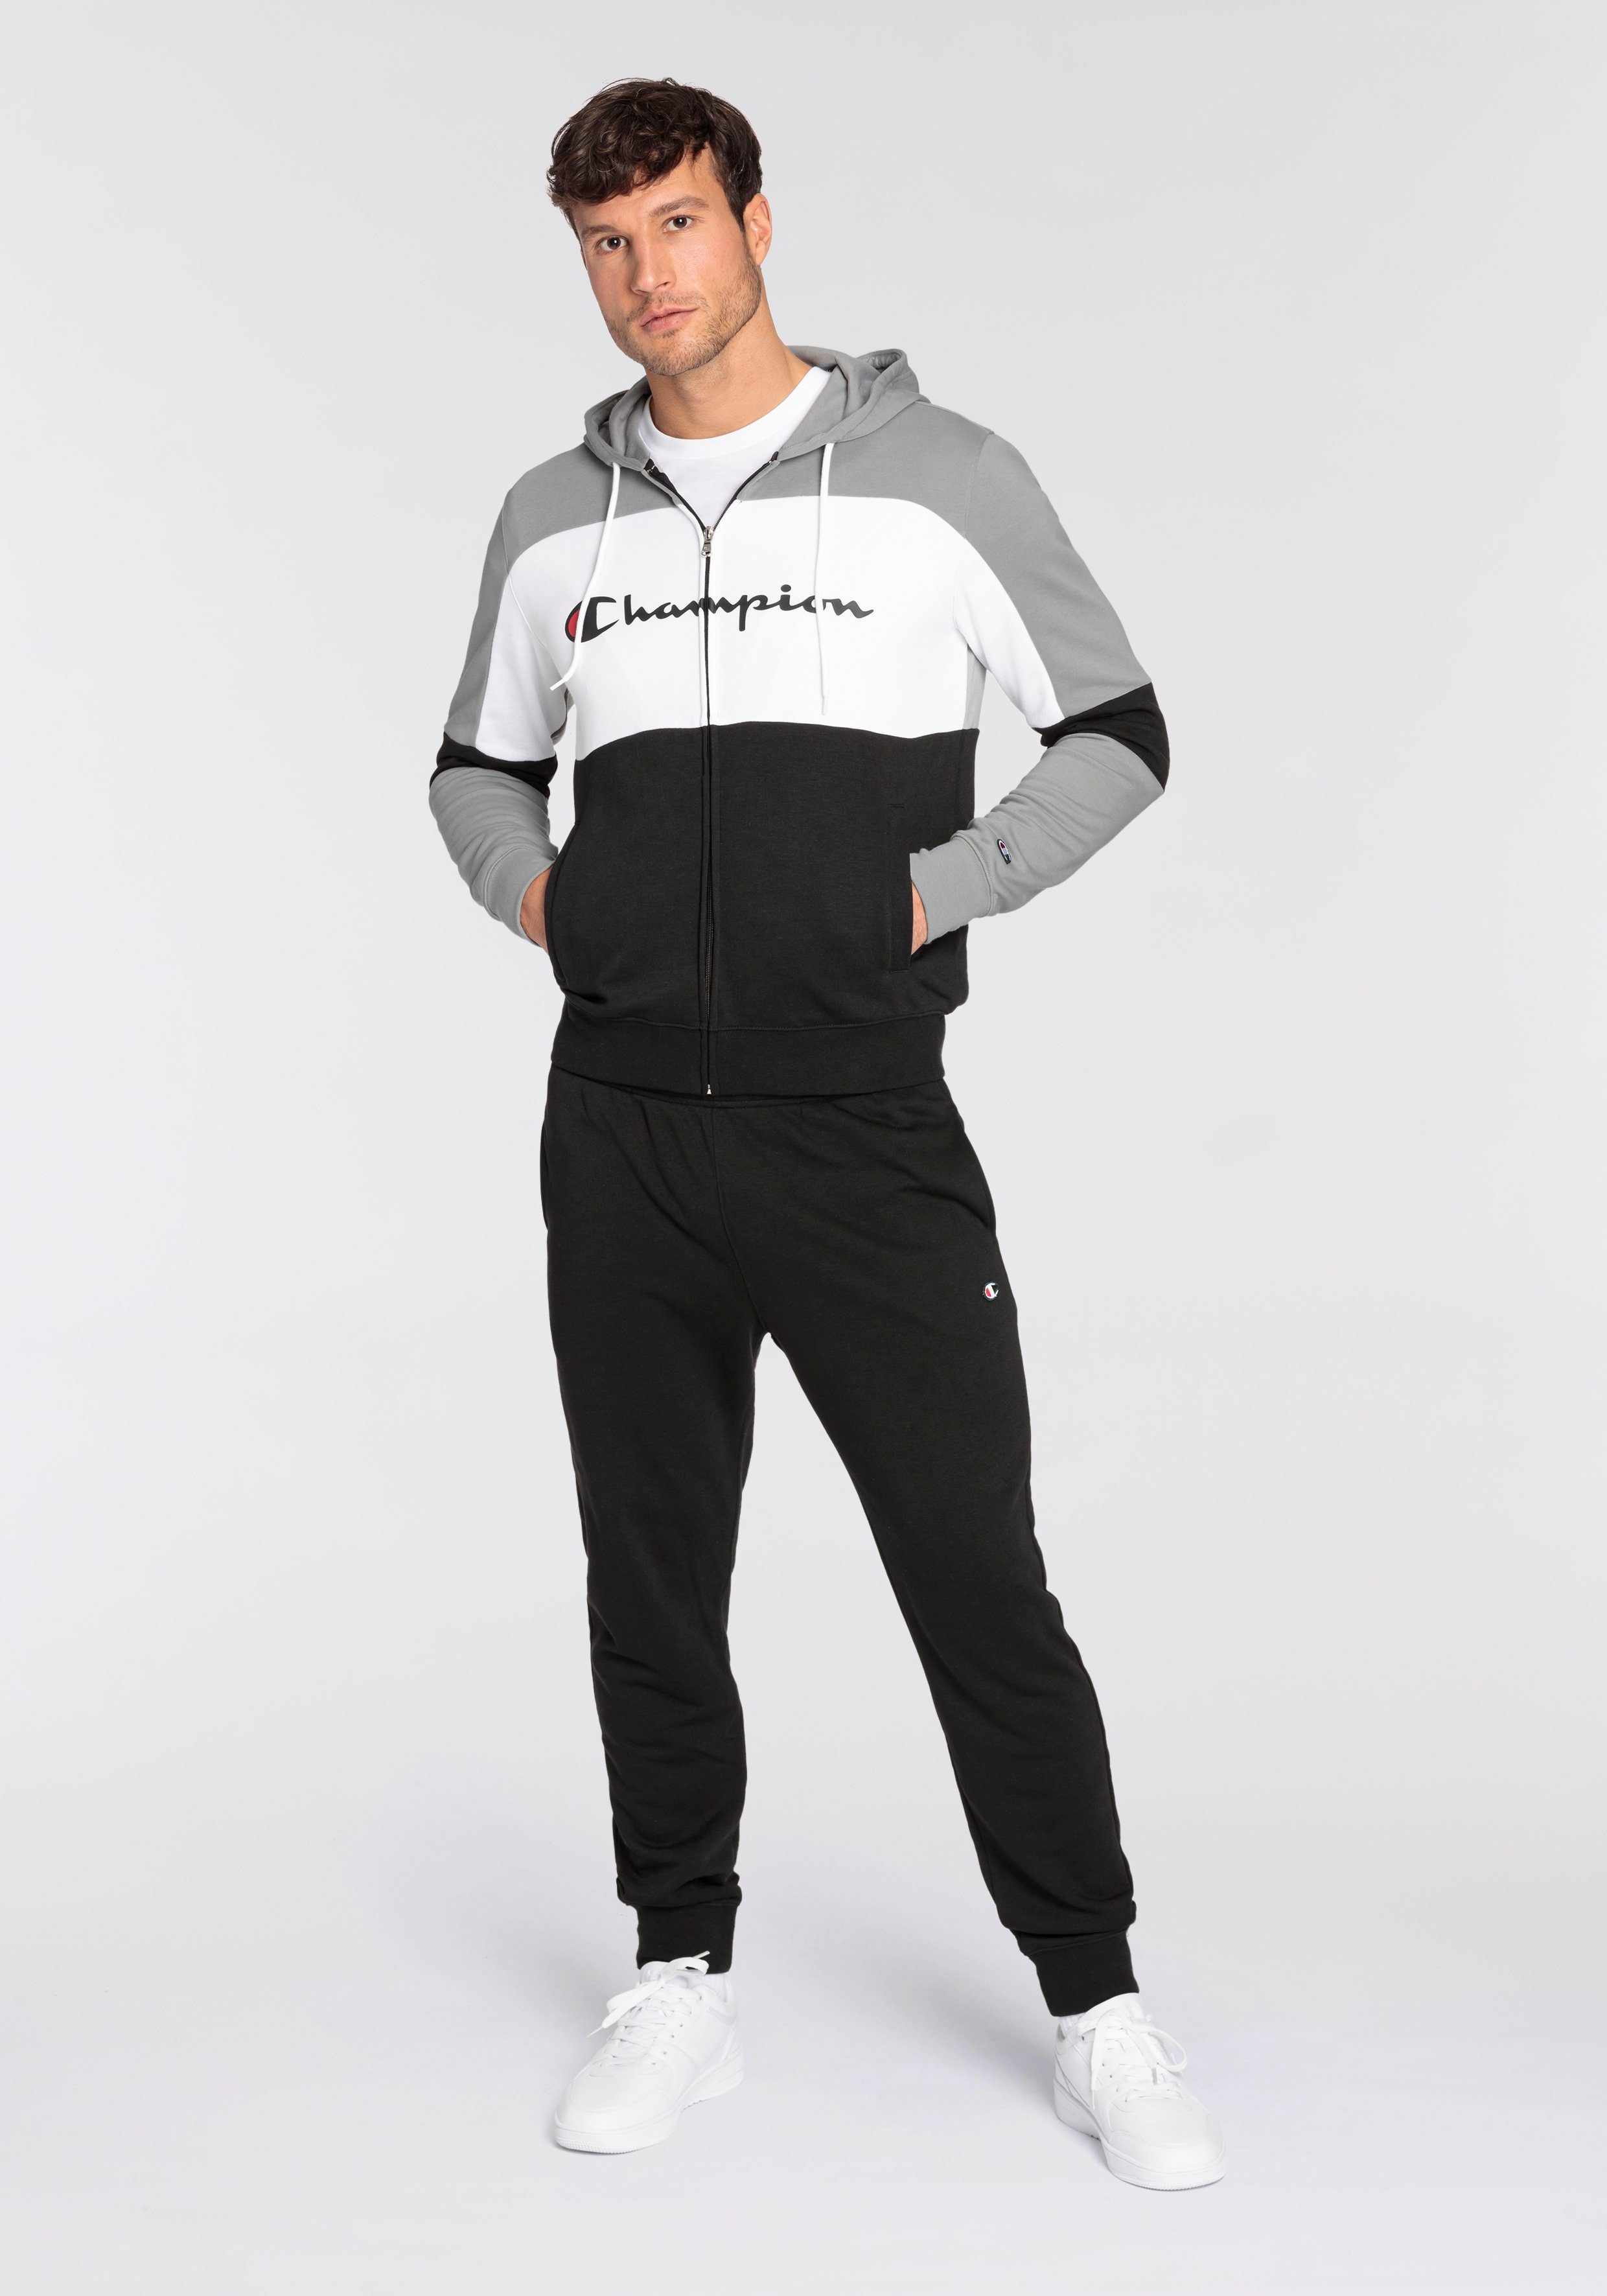 Champion Icons Zip Full Trainingsanzug Sweatsuit Hooded